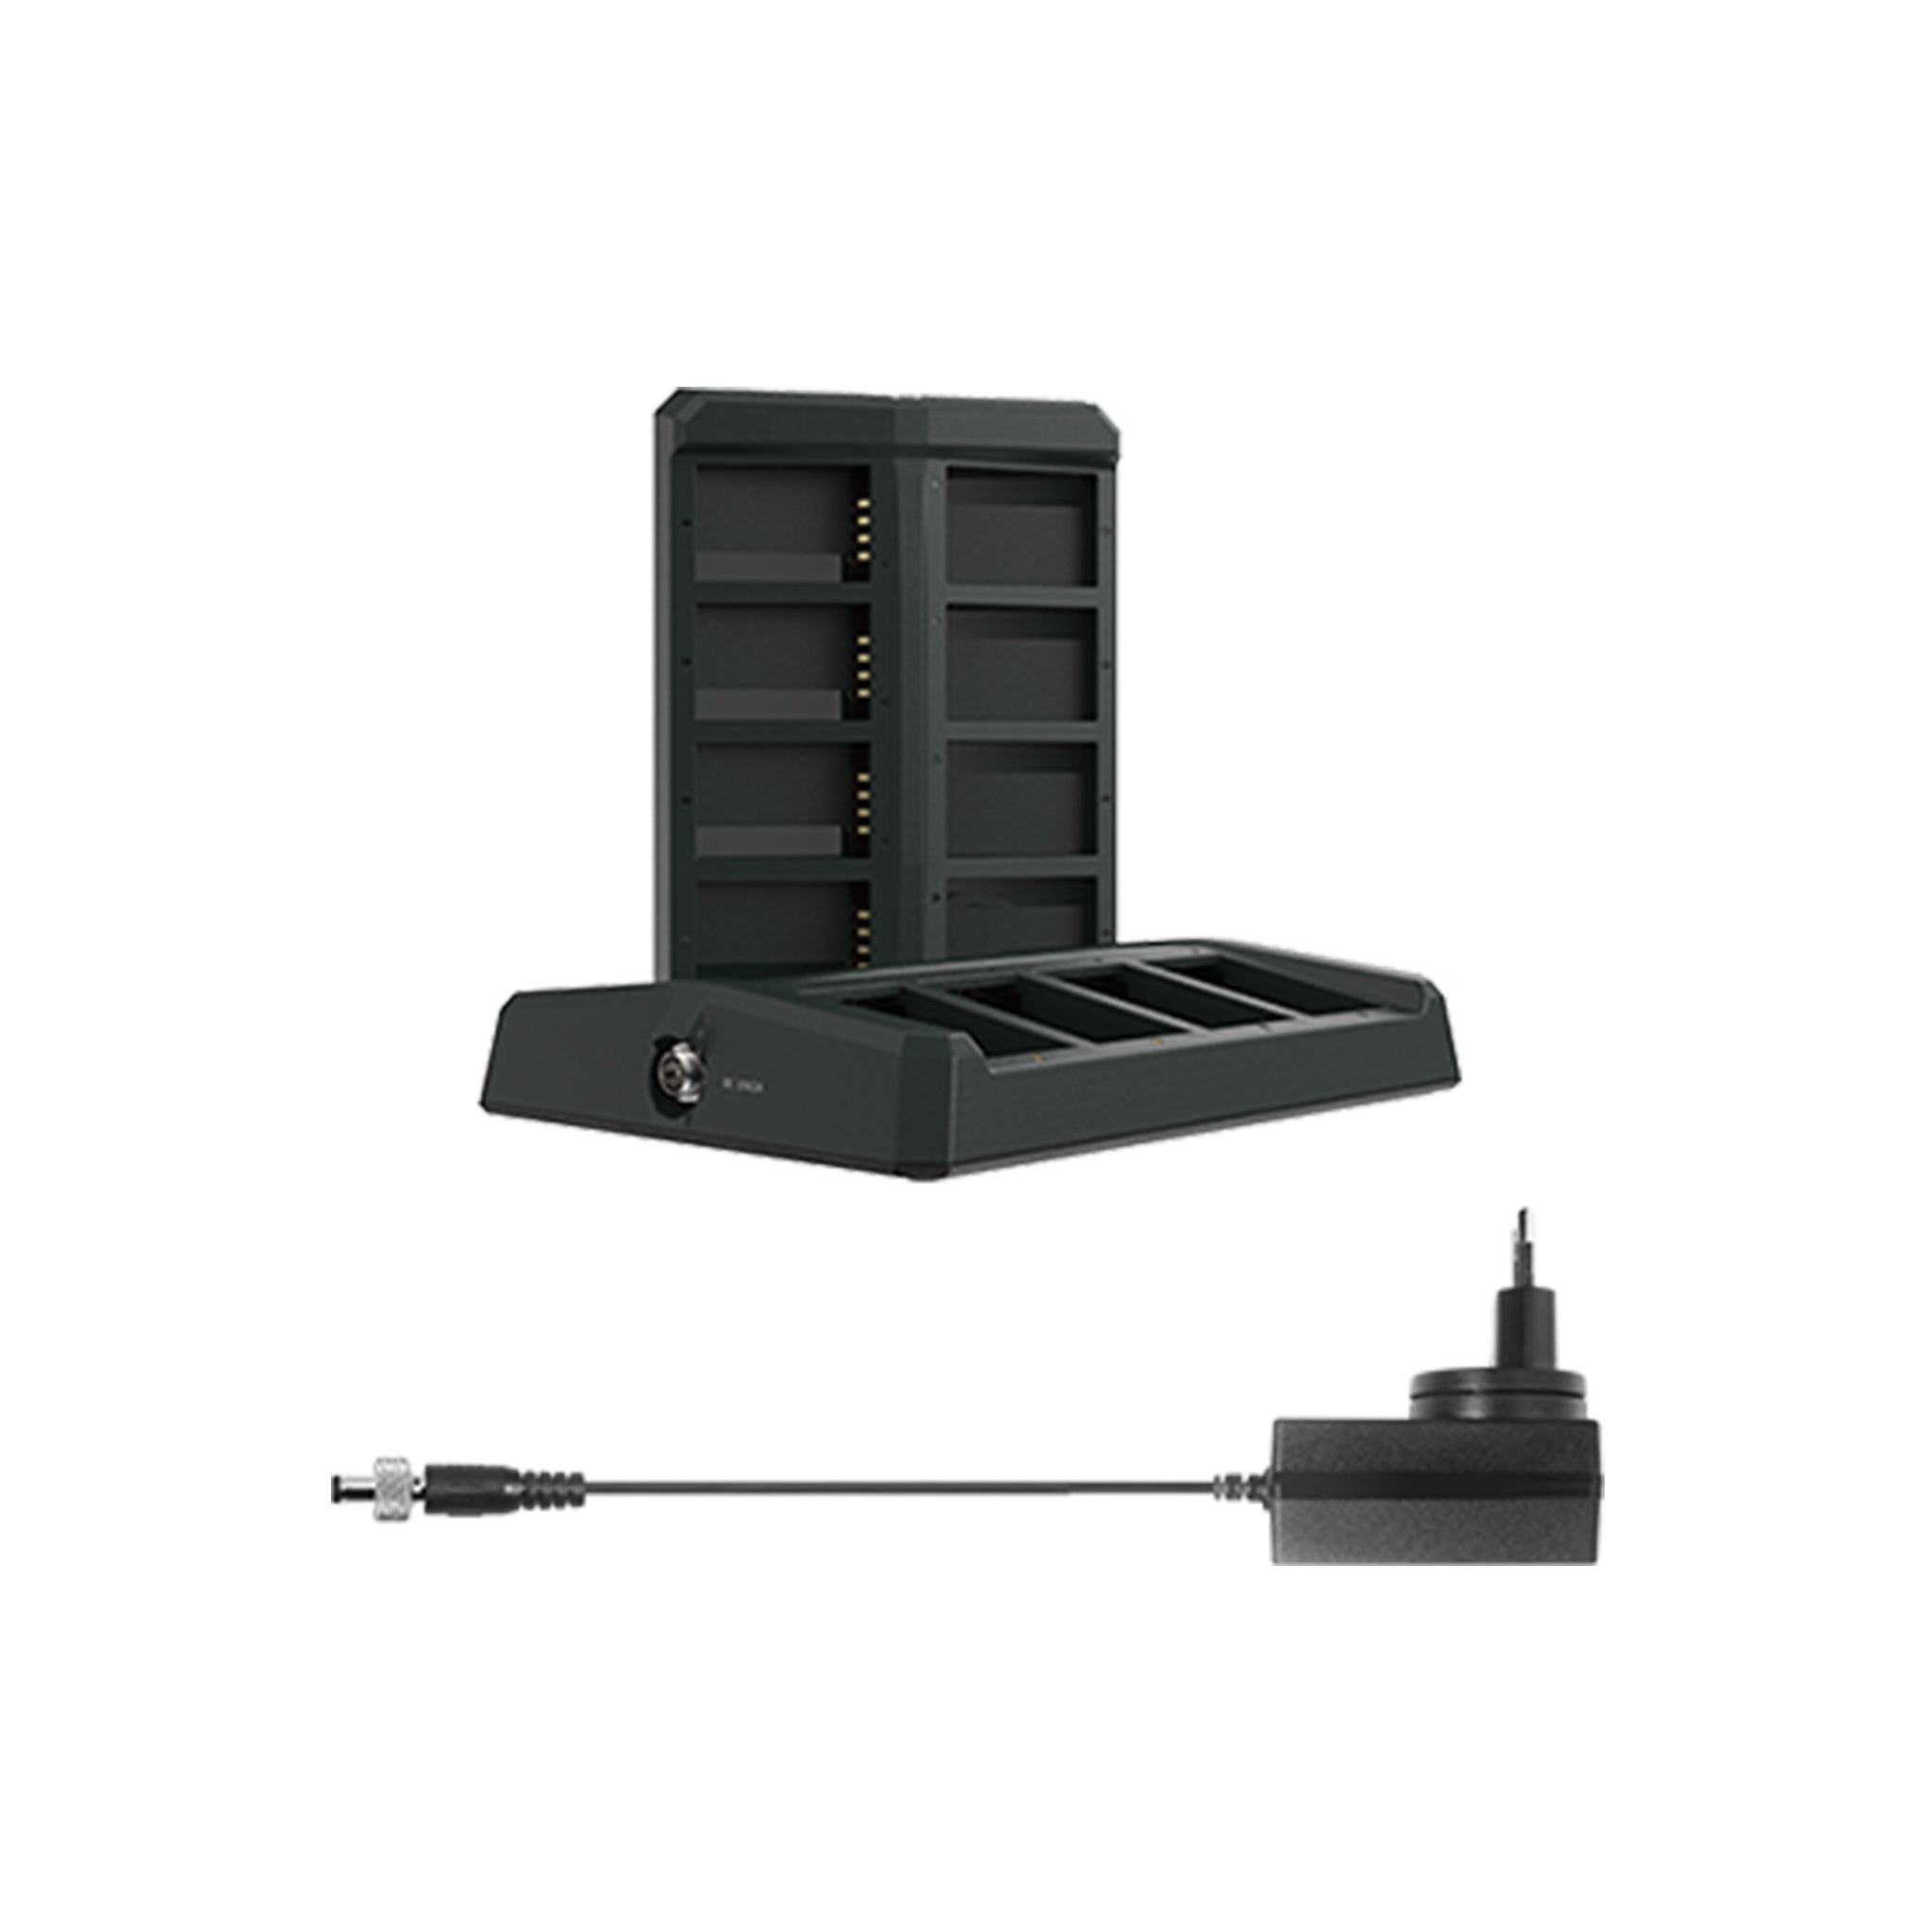 Solidcom C1 (Pro) 8-Slot Battery Charging Case